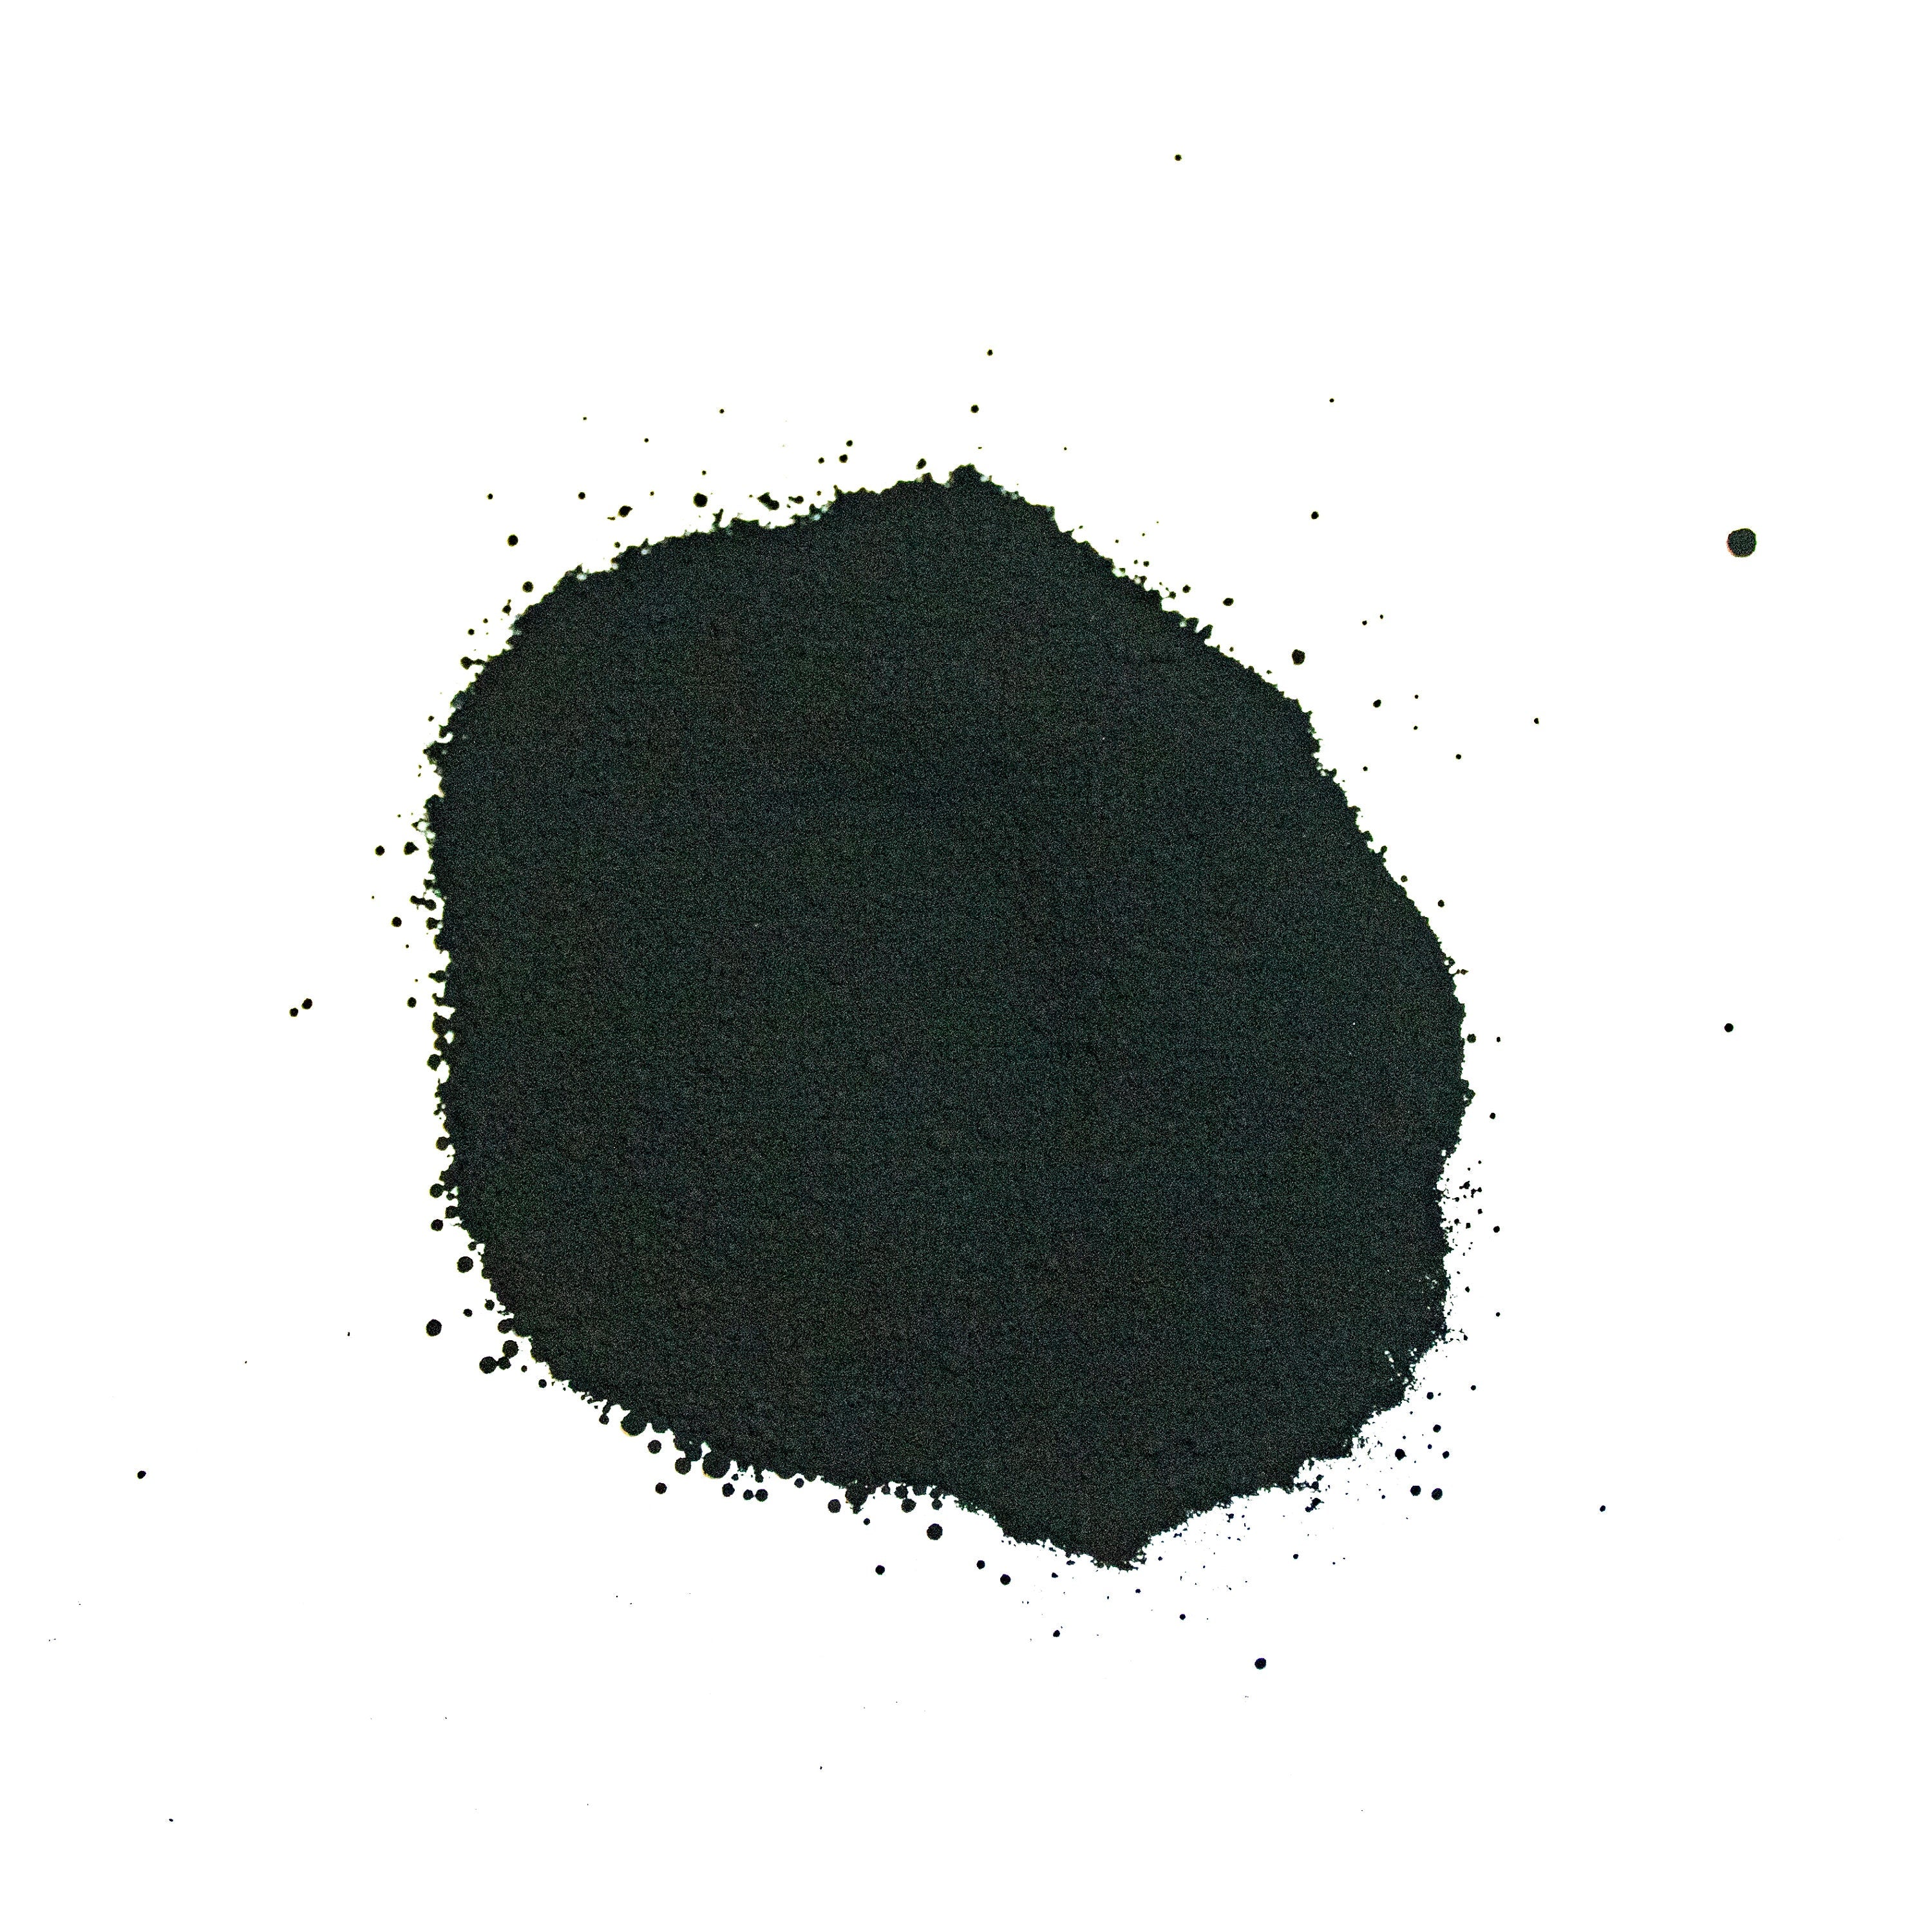 Black Pearl Mica Powder 